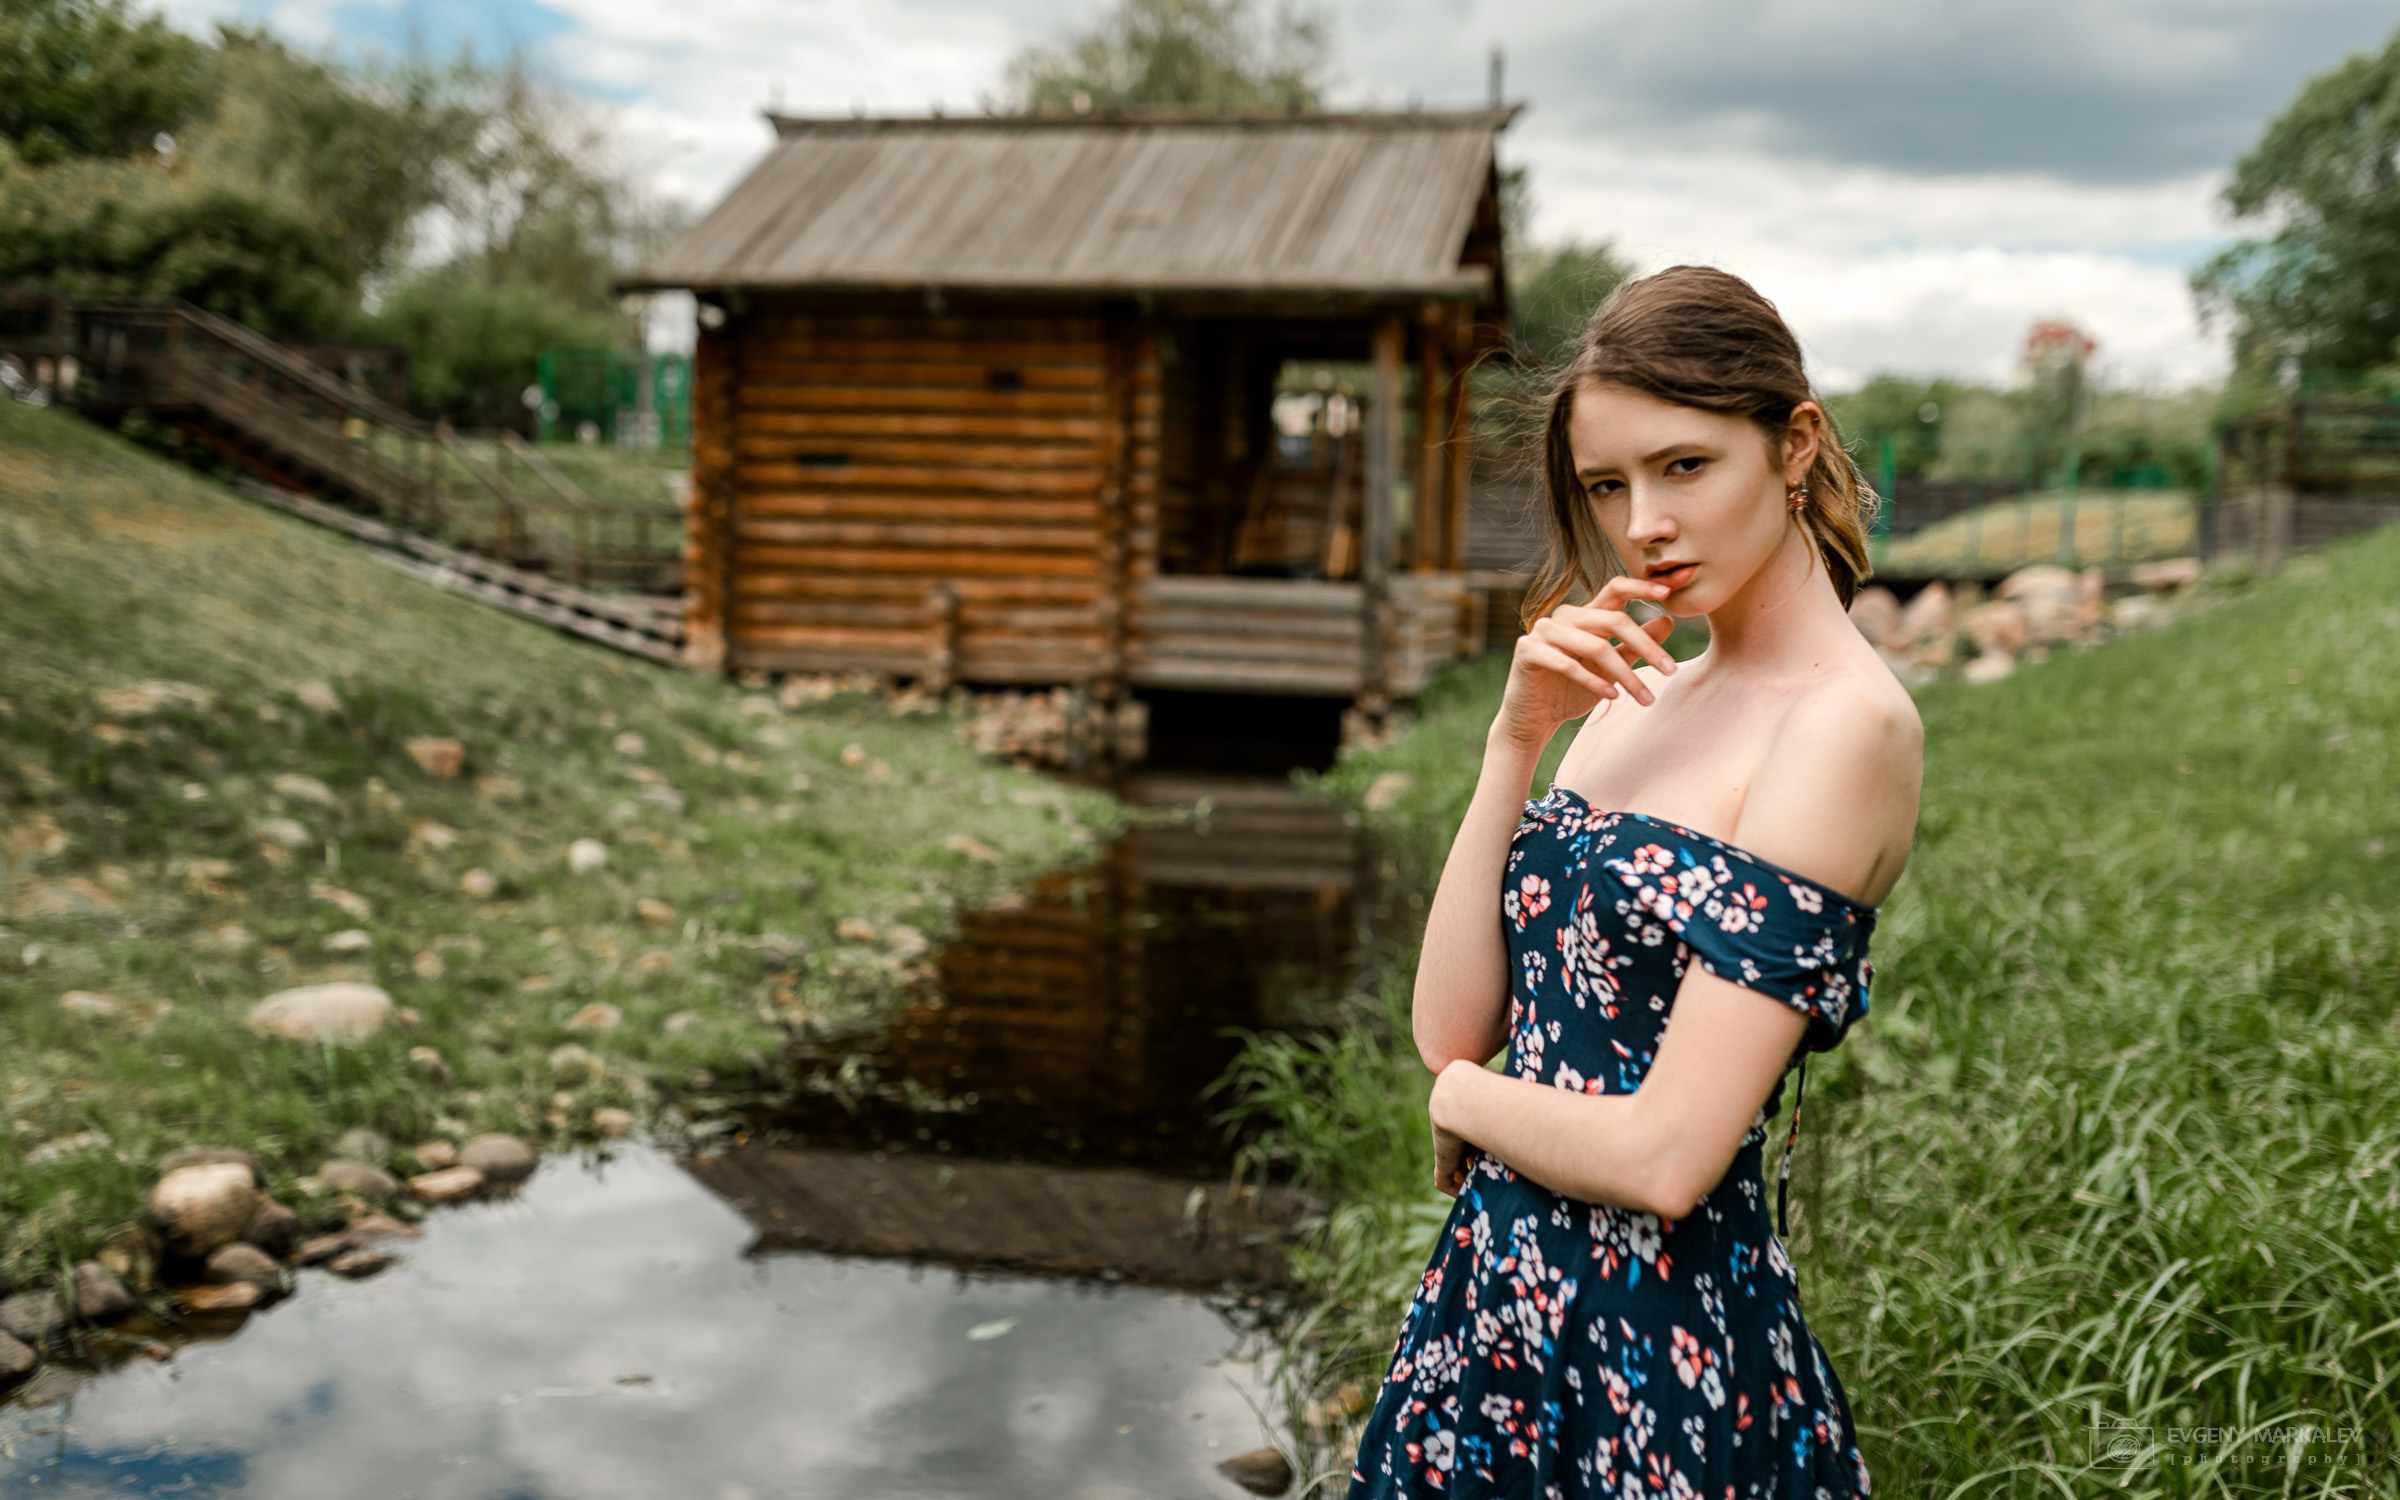 Evgeny Markalev Women Model Brunette Looking At Viewer Dress Bare Shoulders Women Outdoors